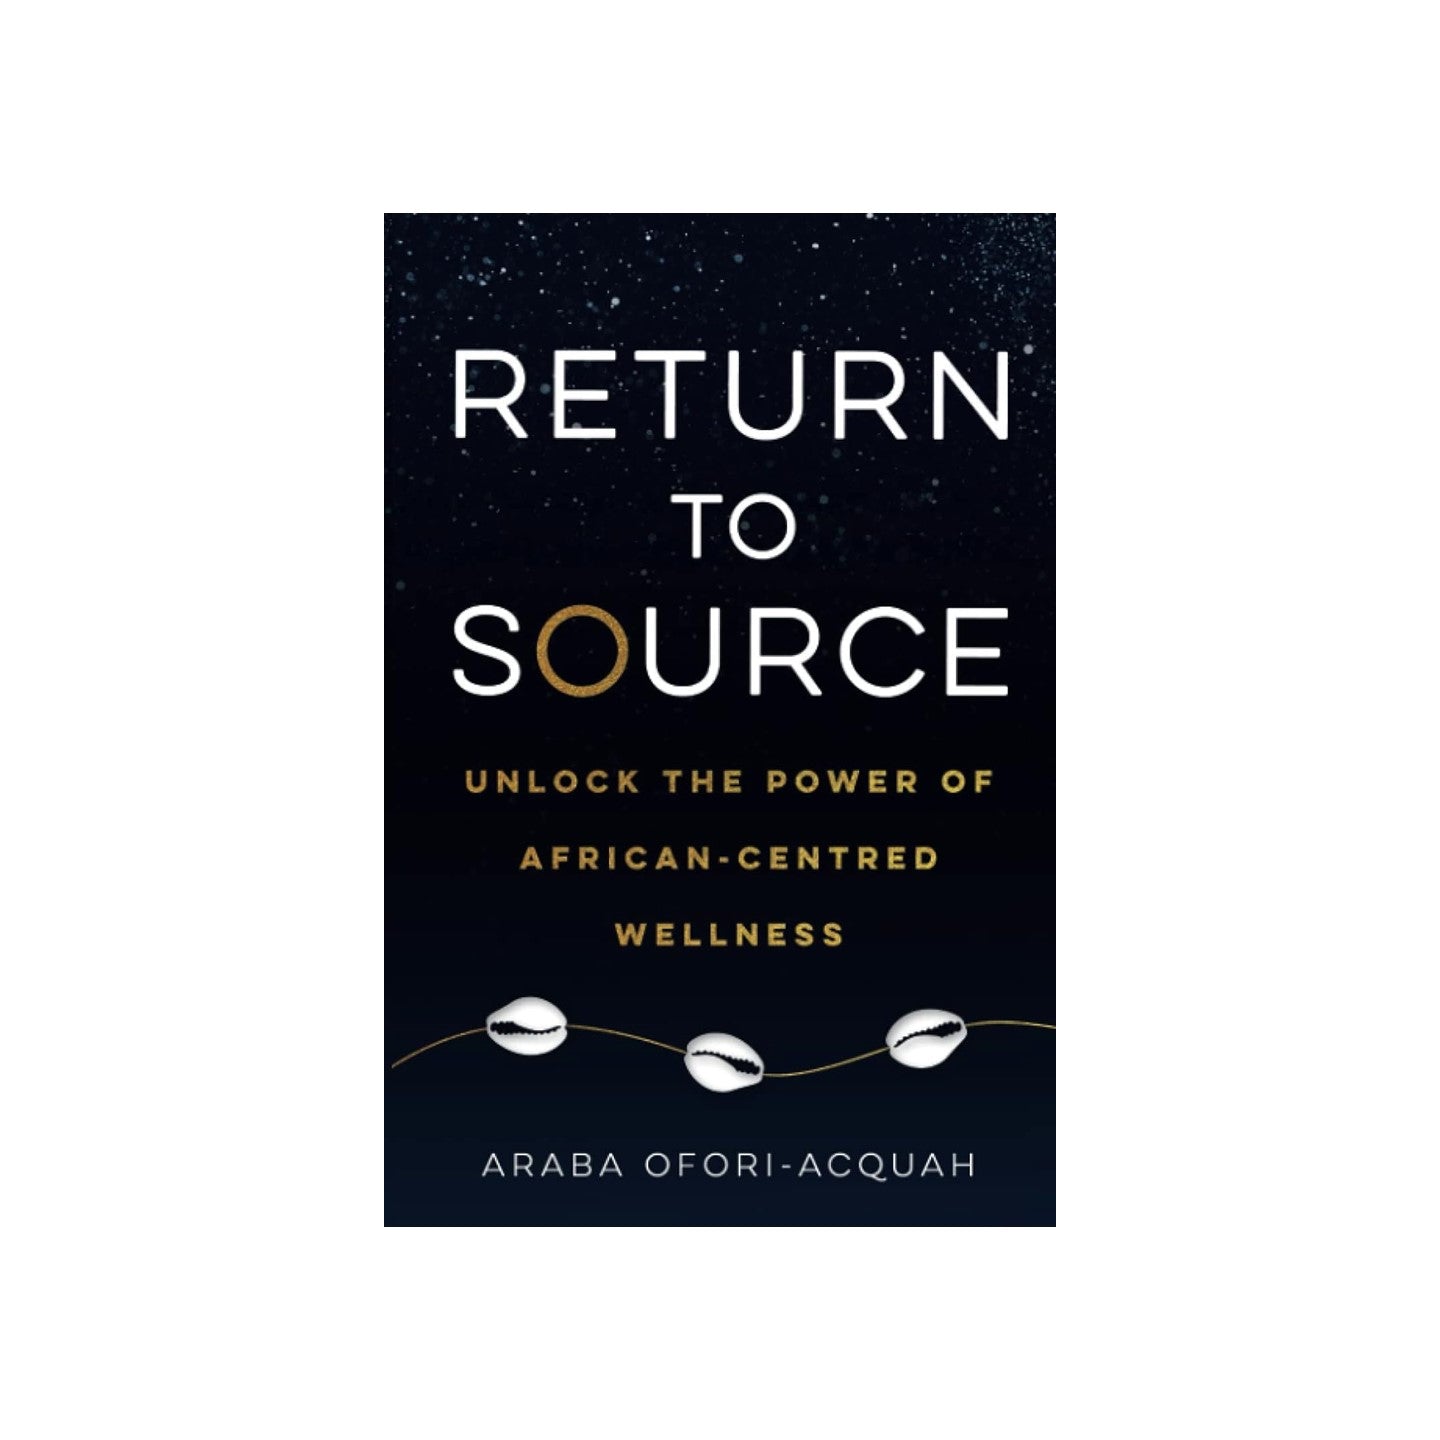 Return to Source by Araba Ofori-Acquah